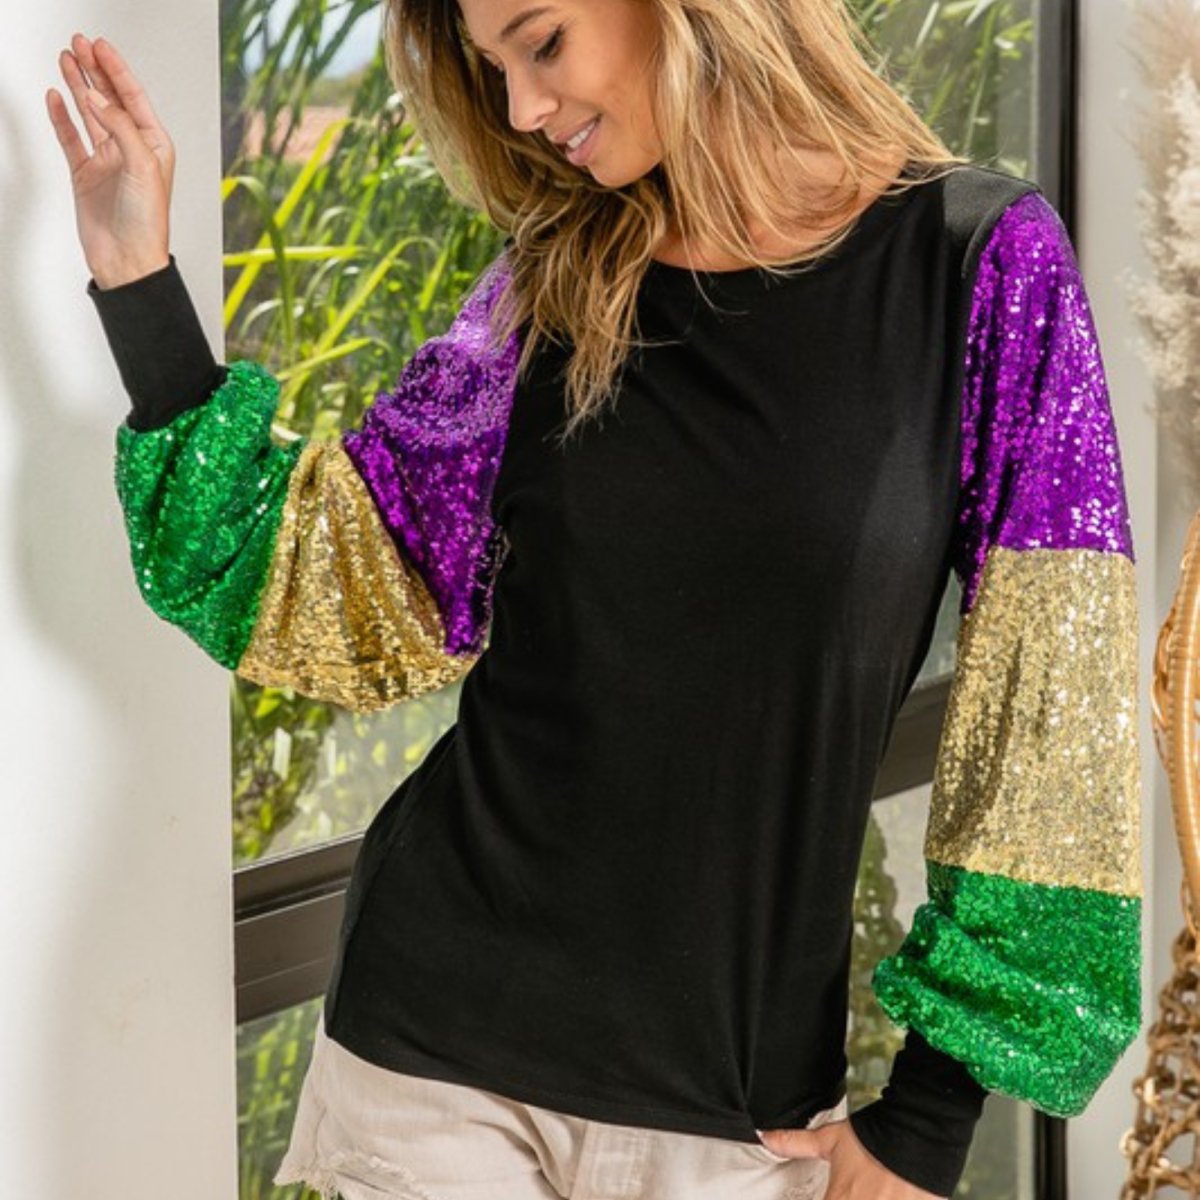 Ladies Mardi Gras Color Block Sequins Sleeve Black Knit Top - Mardi Gras Apparel